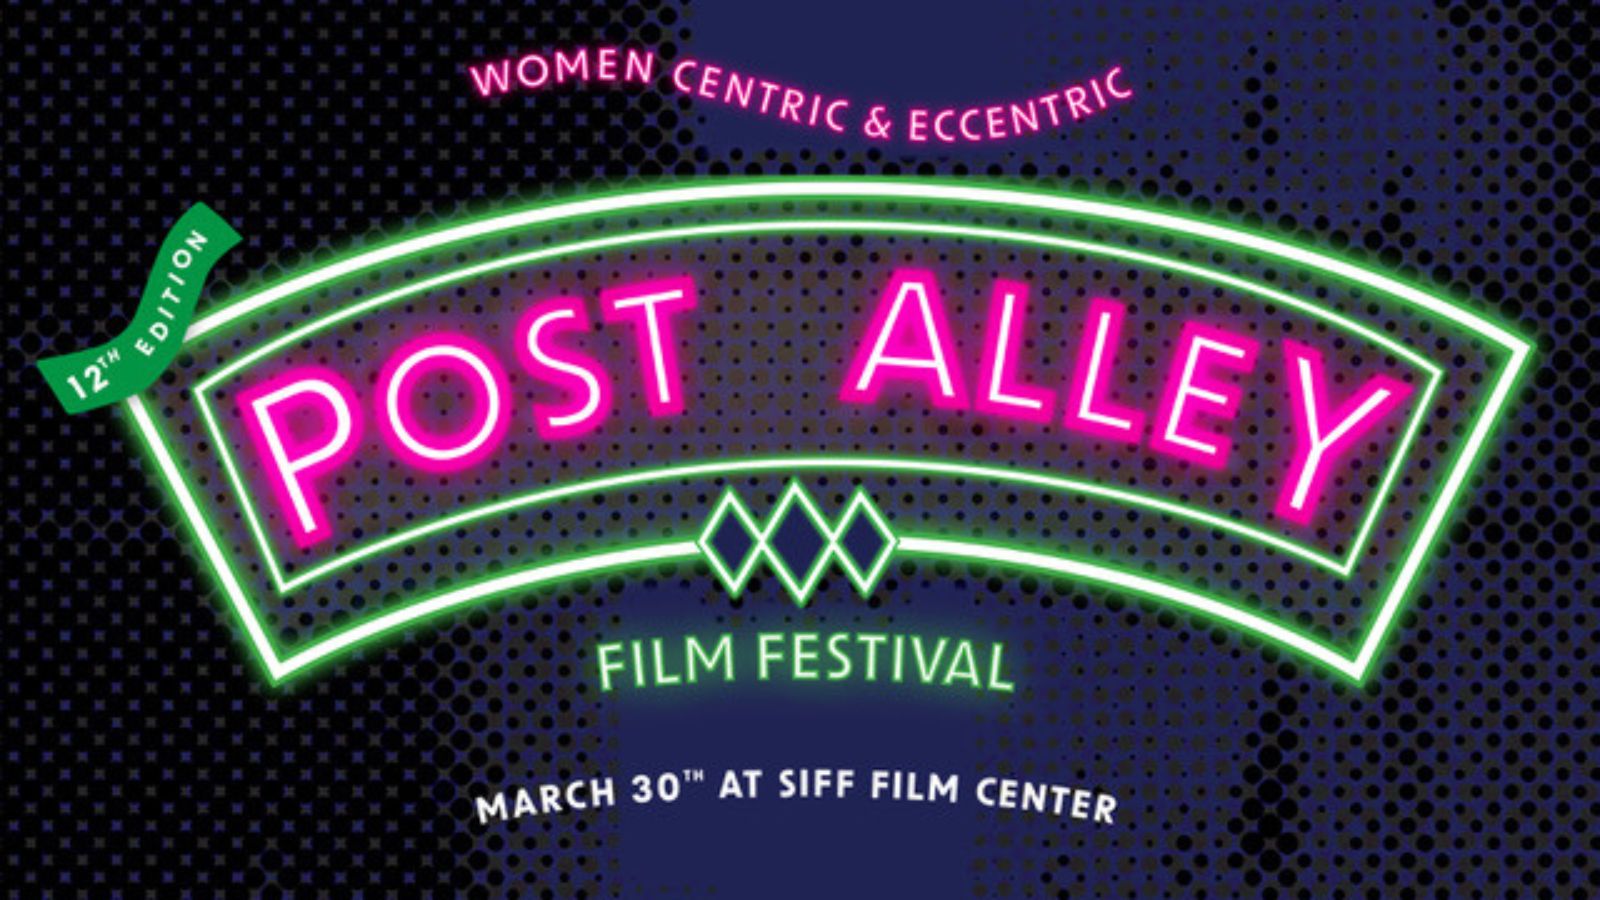 Post Alley Film Festival